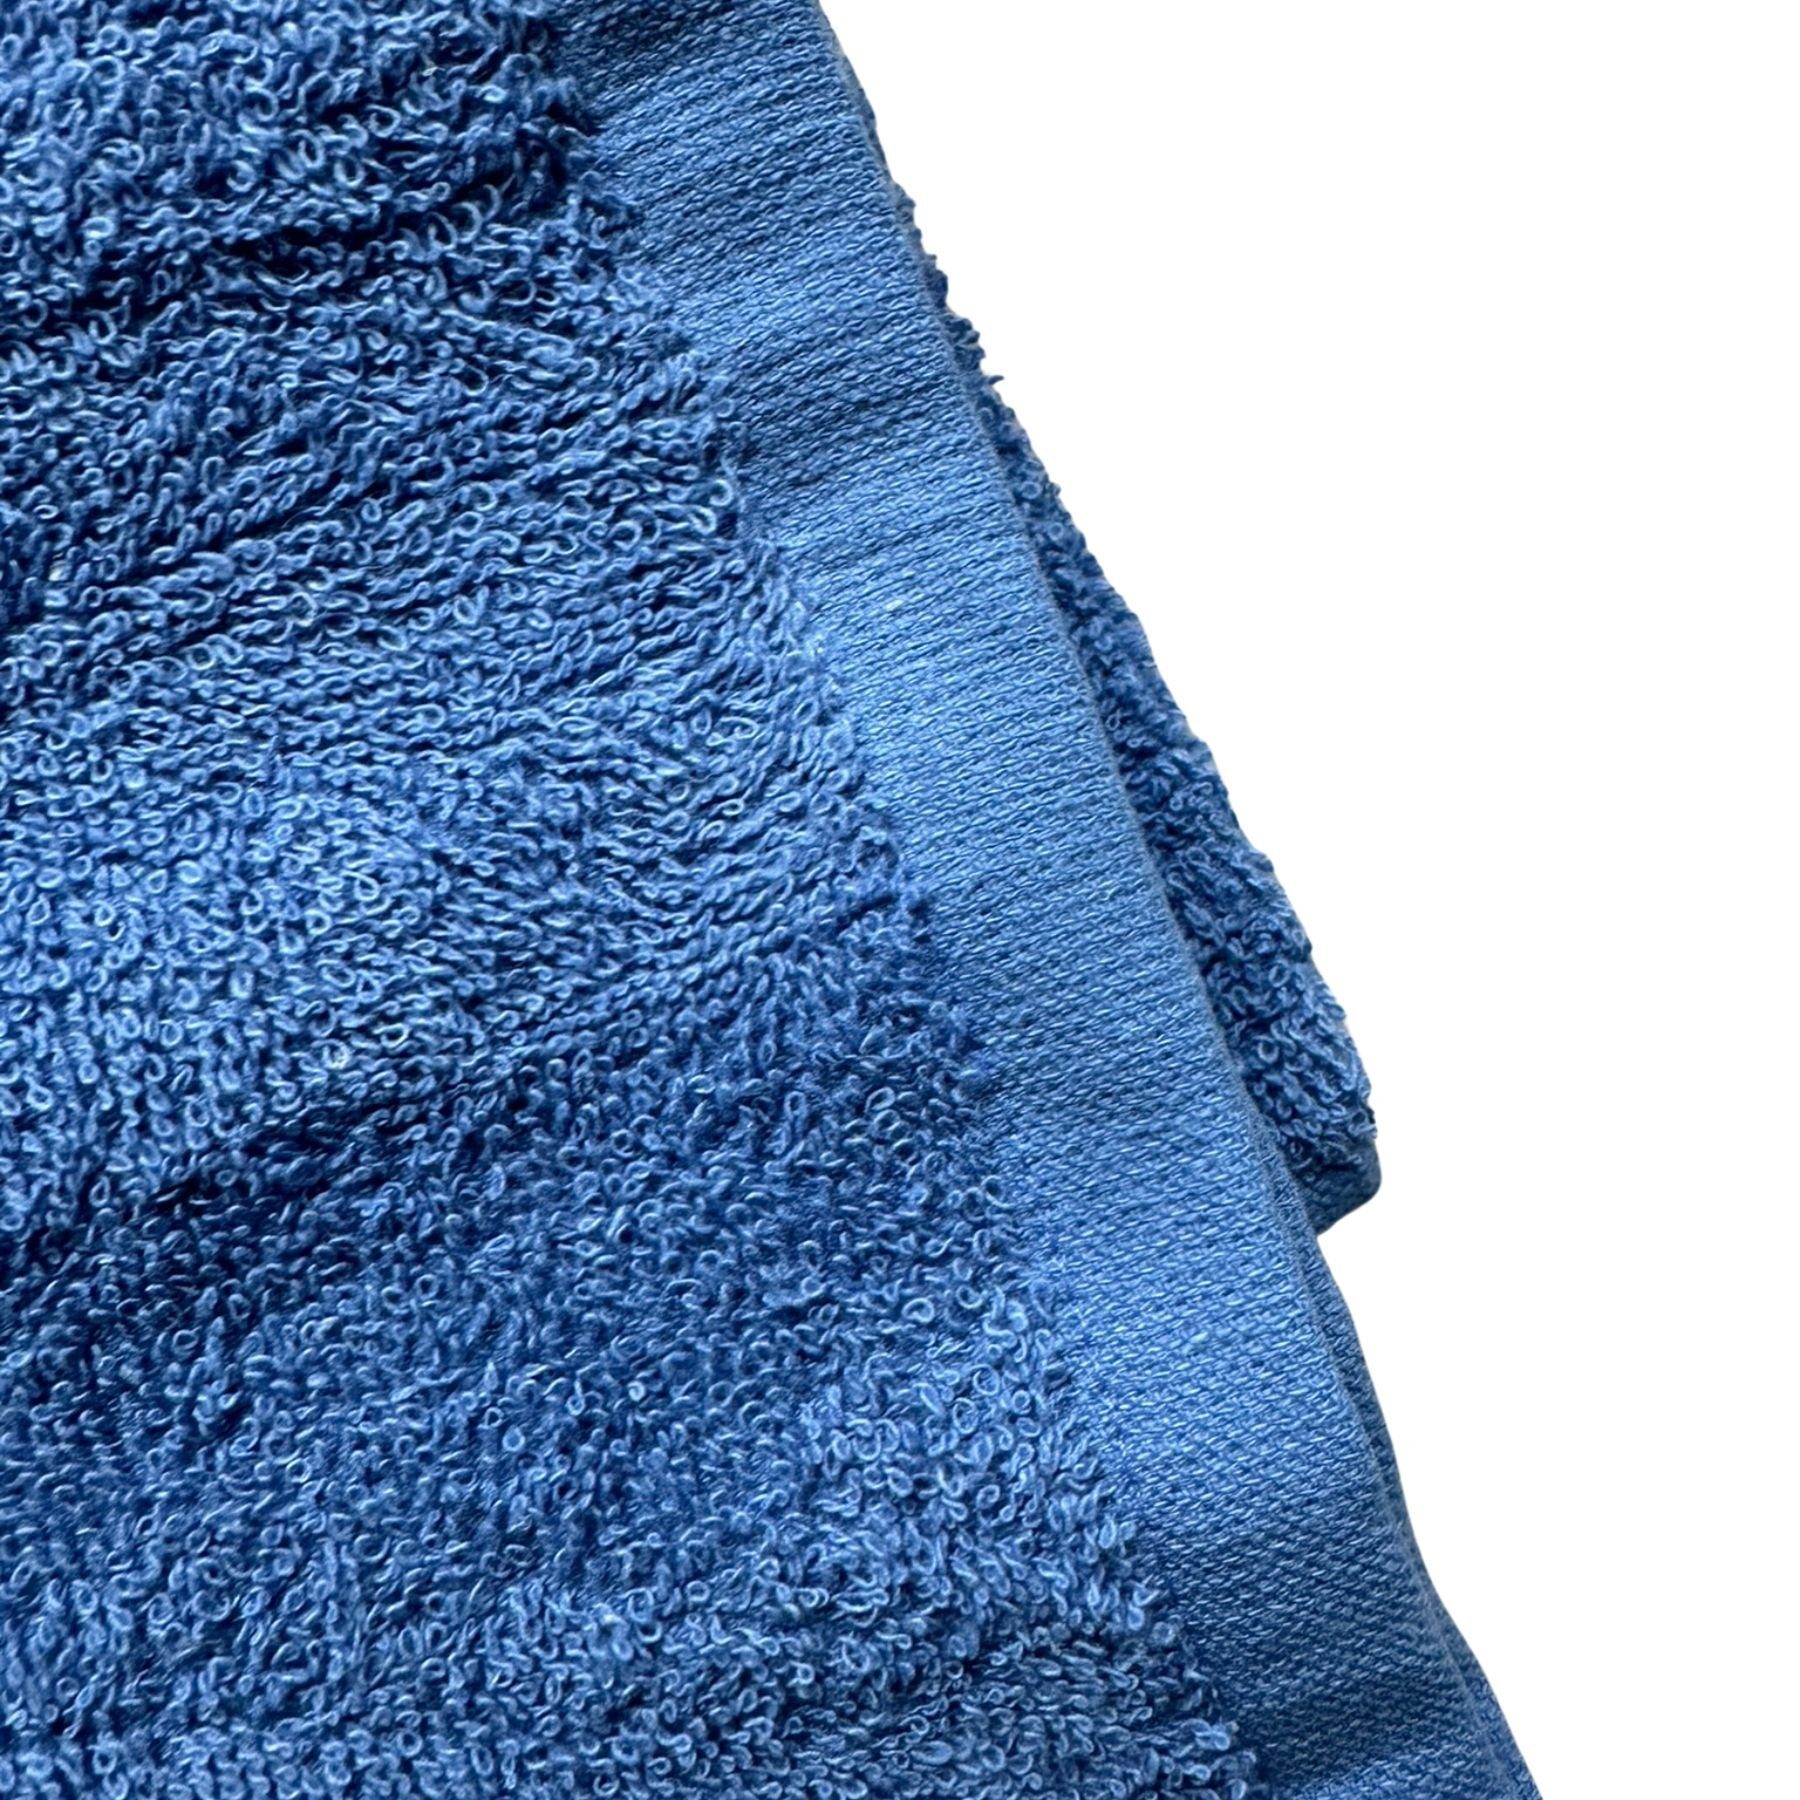 Farben Duschtücherset 100%Baumwolle aus Duschtuch 100% Baumwolle (2-St), Unifarbenes FSH Blau verschiedene 2 Duschtücher 70x140cm Baumwolle 450g/m²,